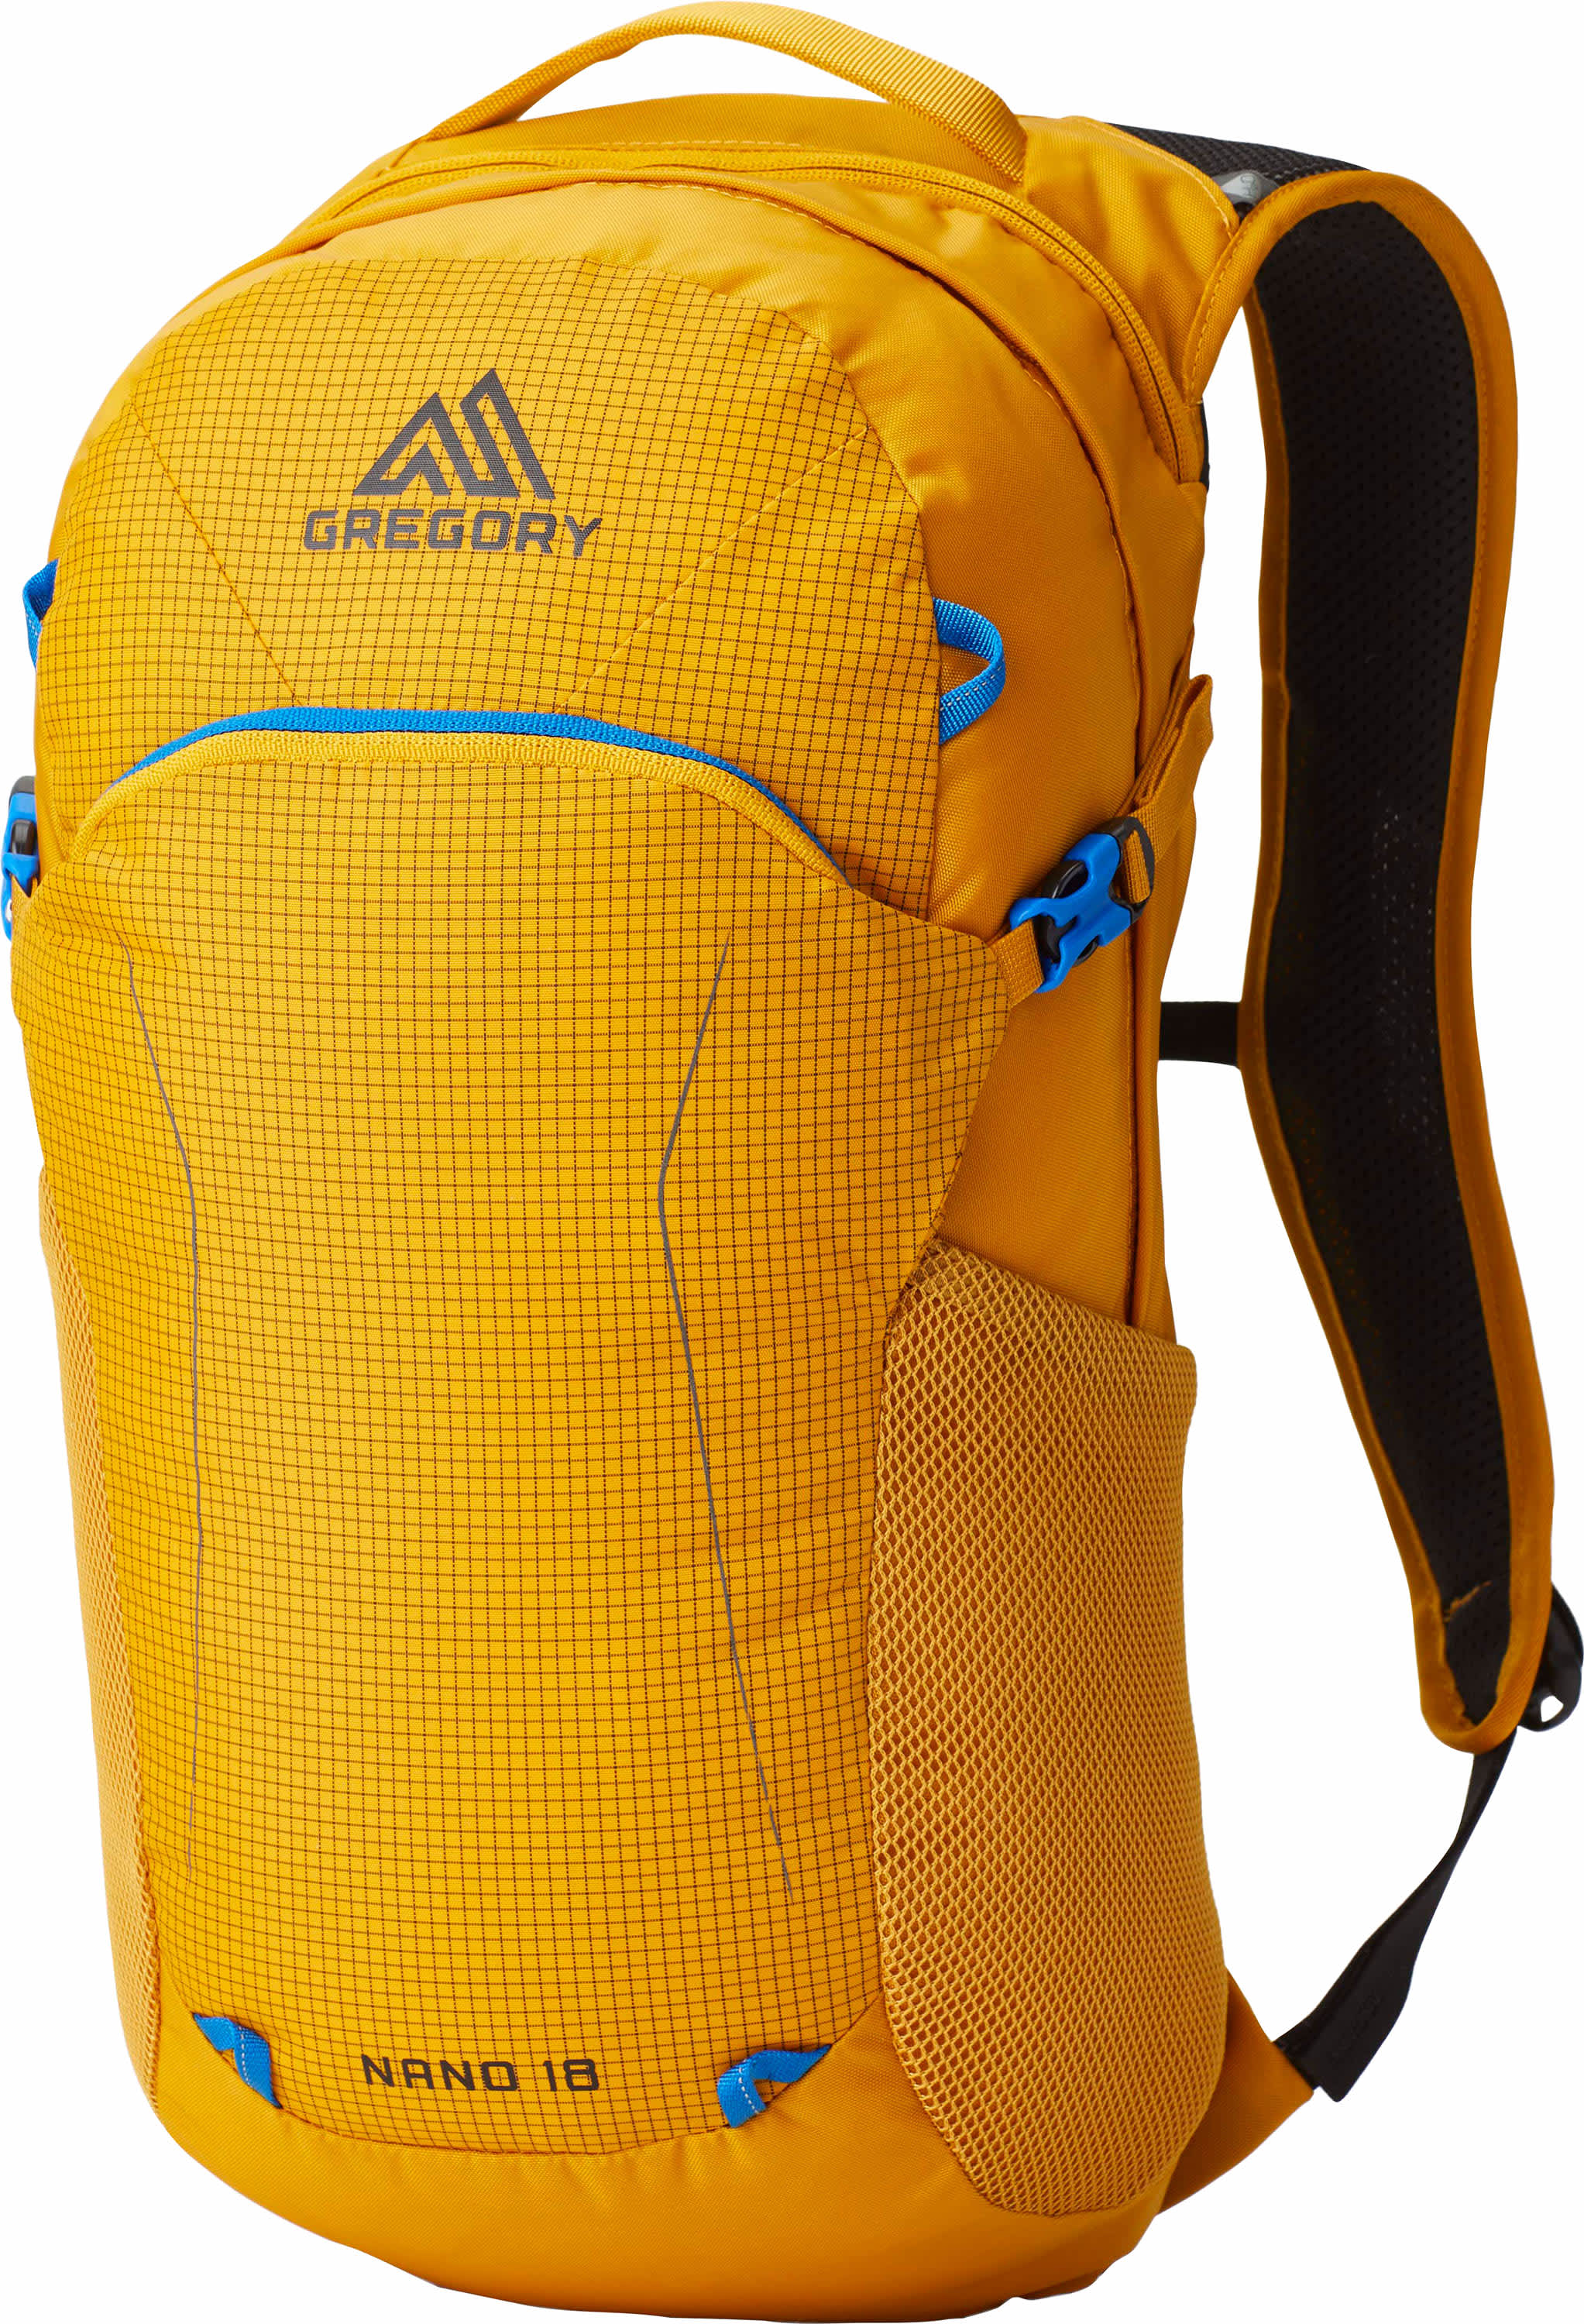 Gregory® Nano 18 Backpack